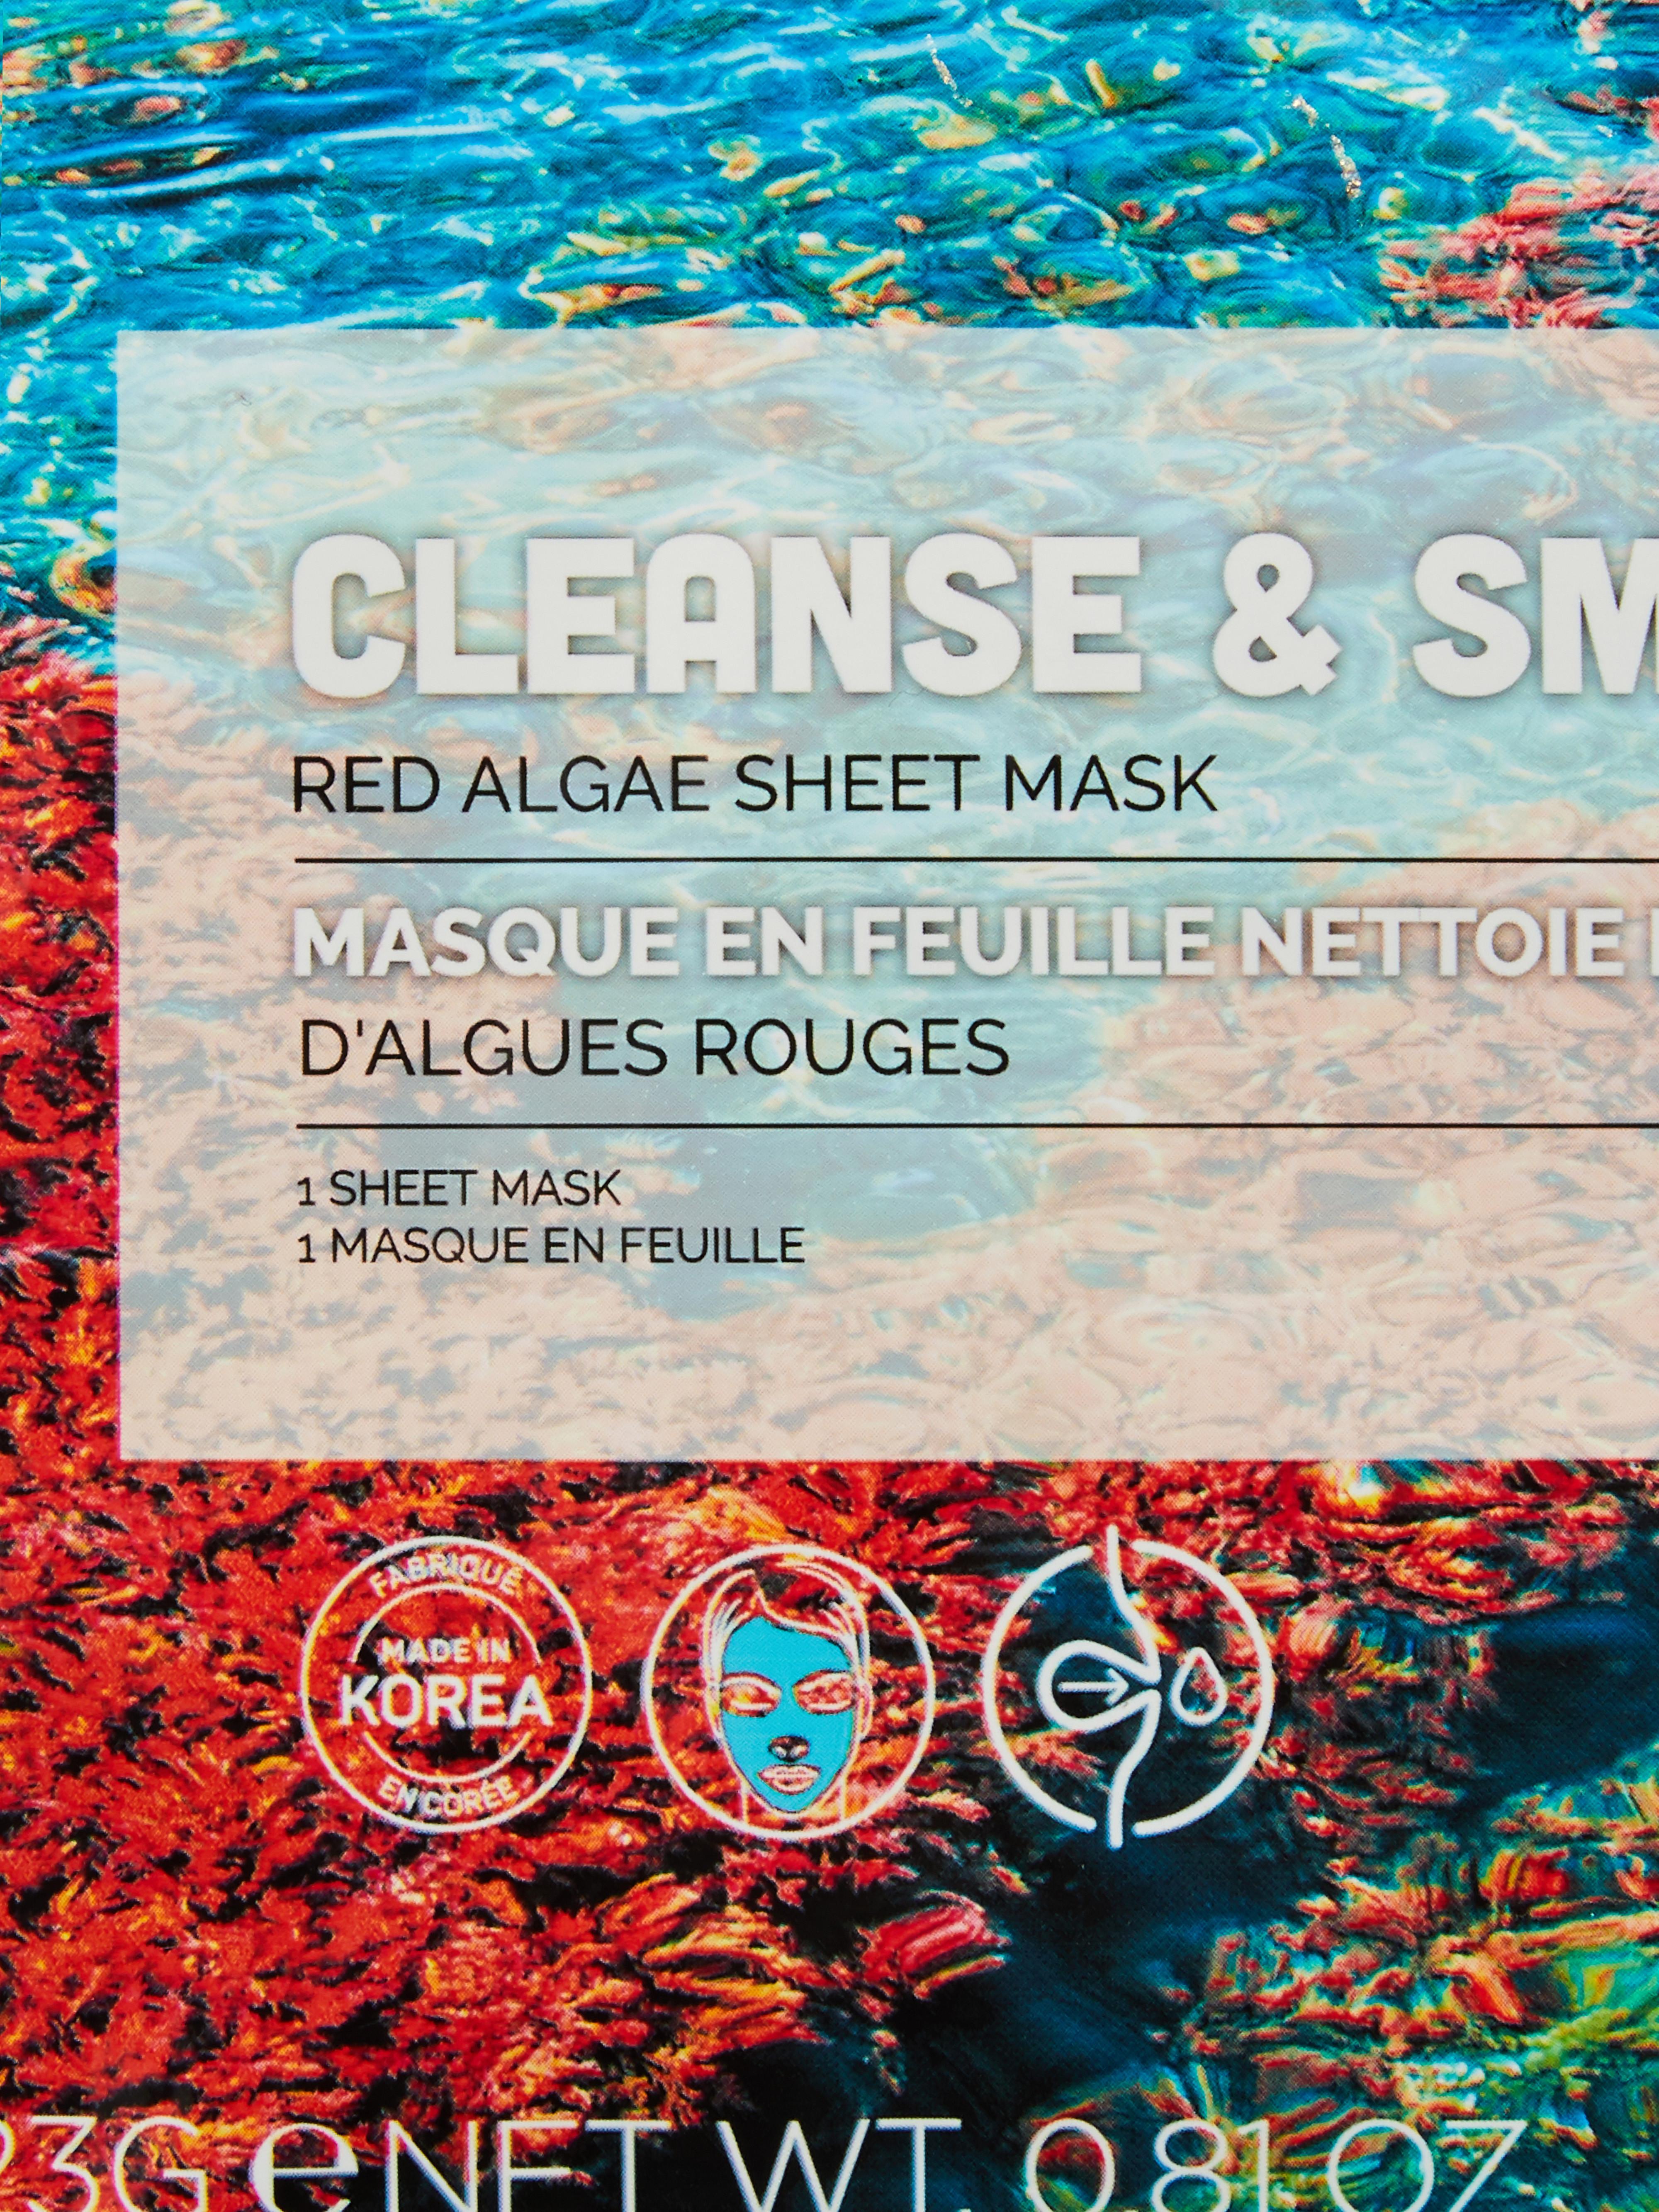 PS... Red Algae Sheet Mask